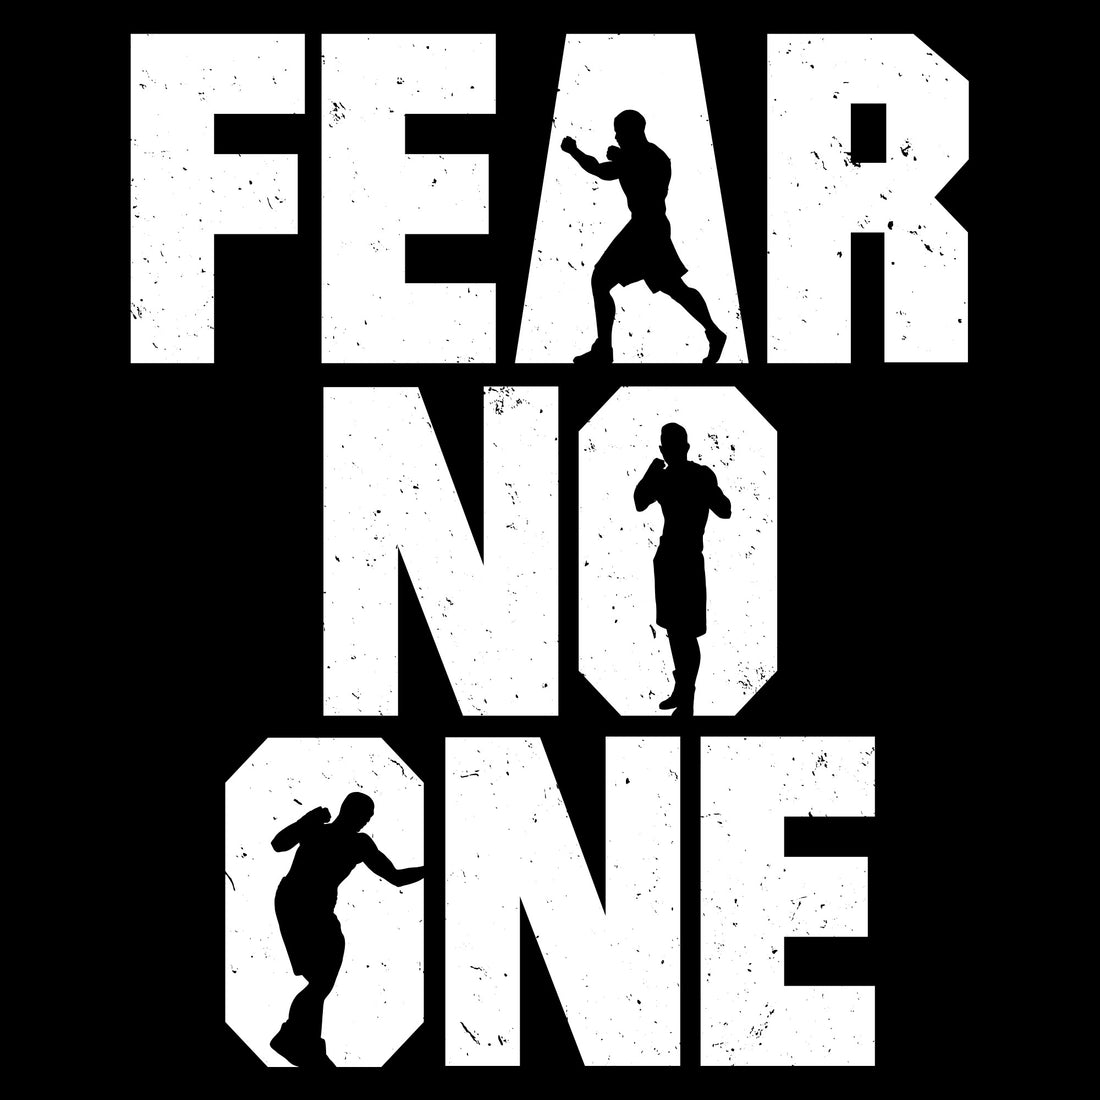 BKFC Fear No One T-Shirt - Black